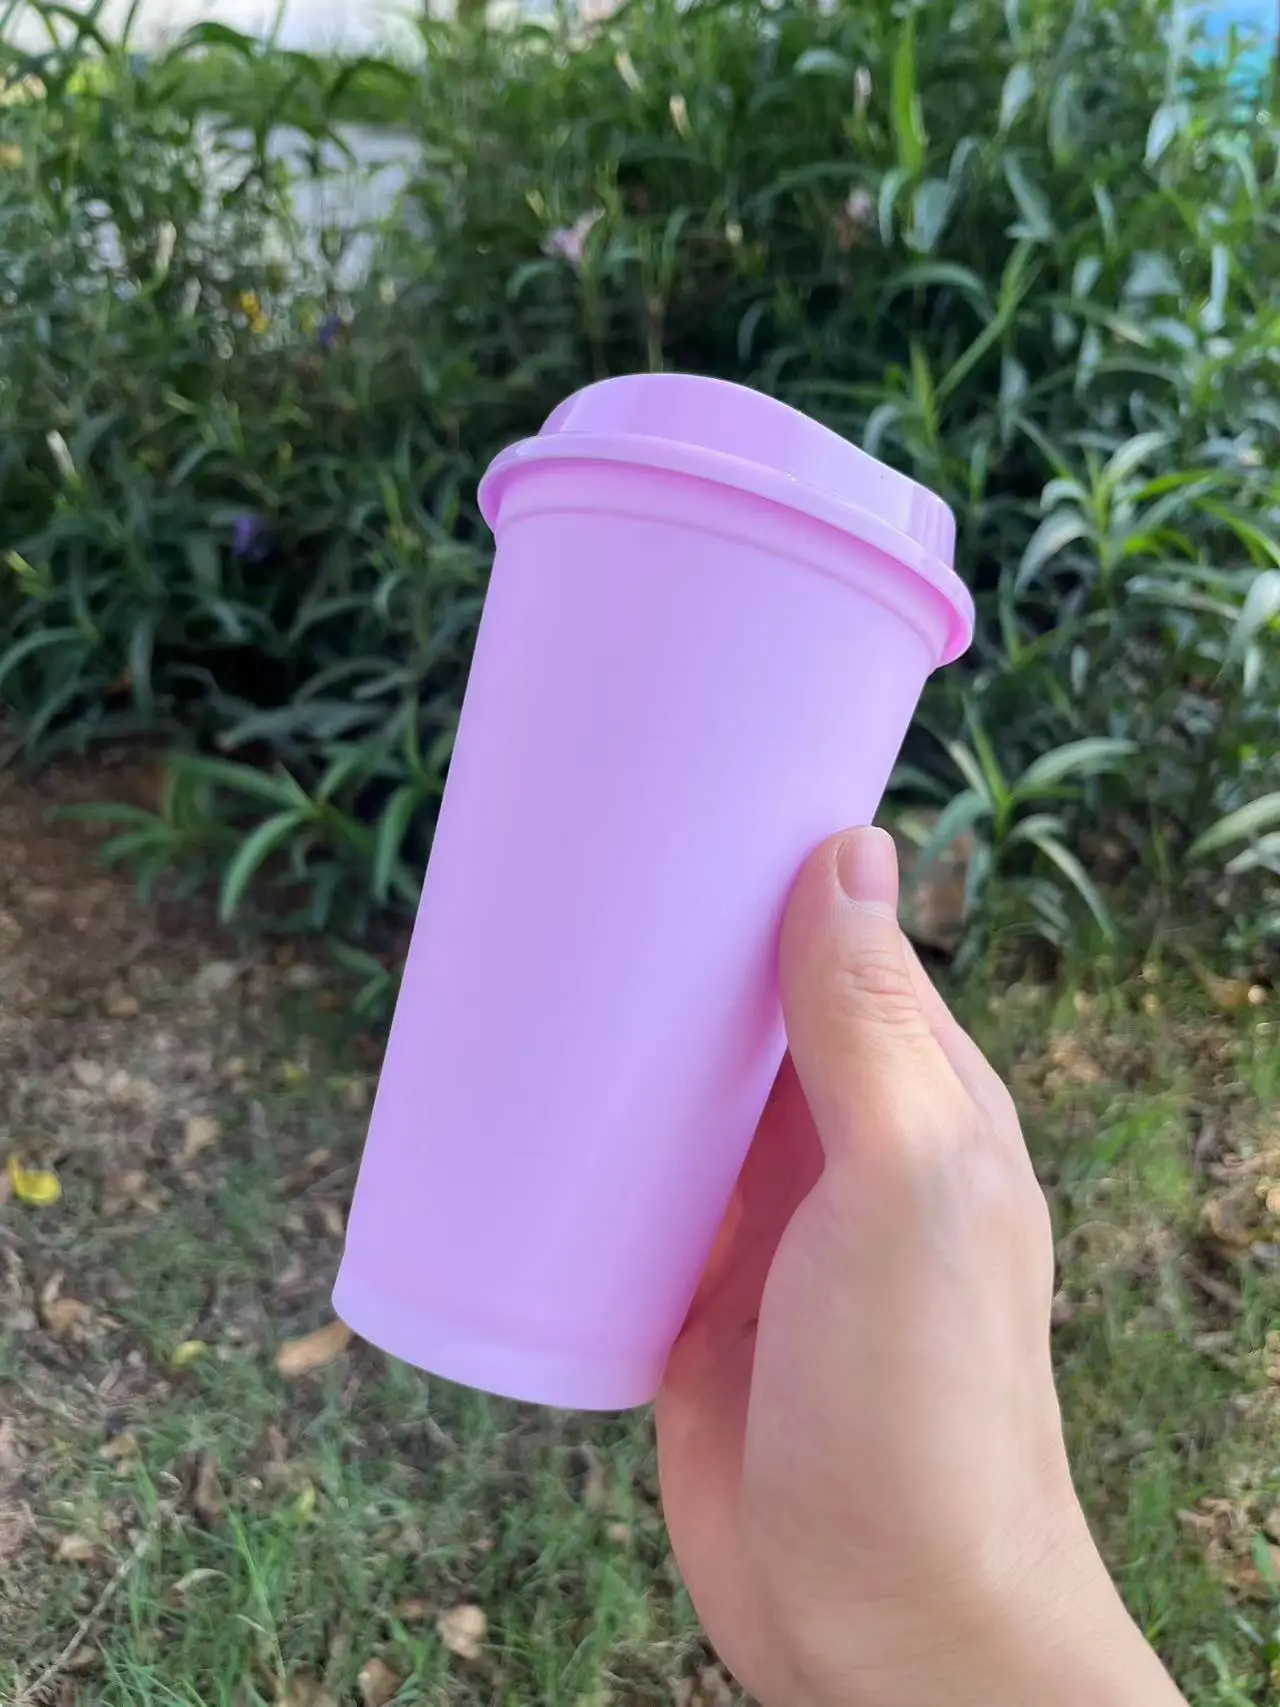 Iced Coffee Travel Mug Cup W/ Straws. Drink Pretty Plastic BPA Free Hot  Pink